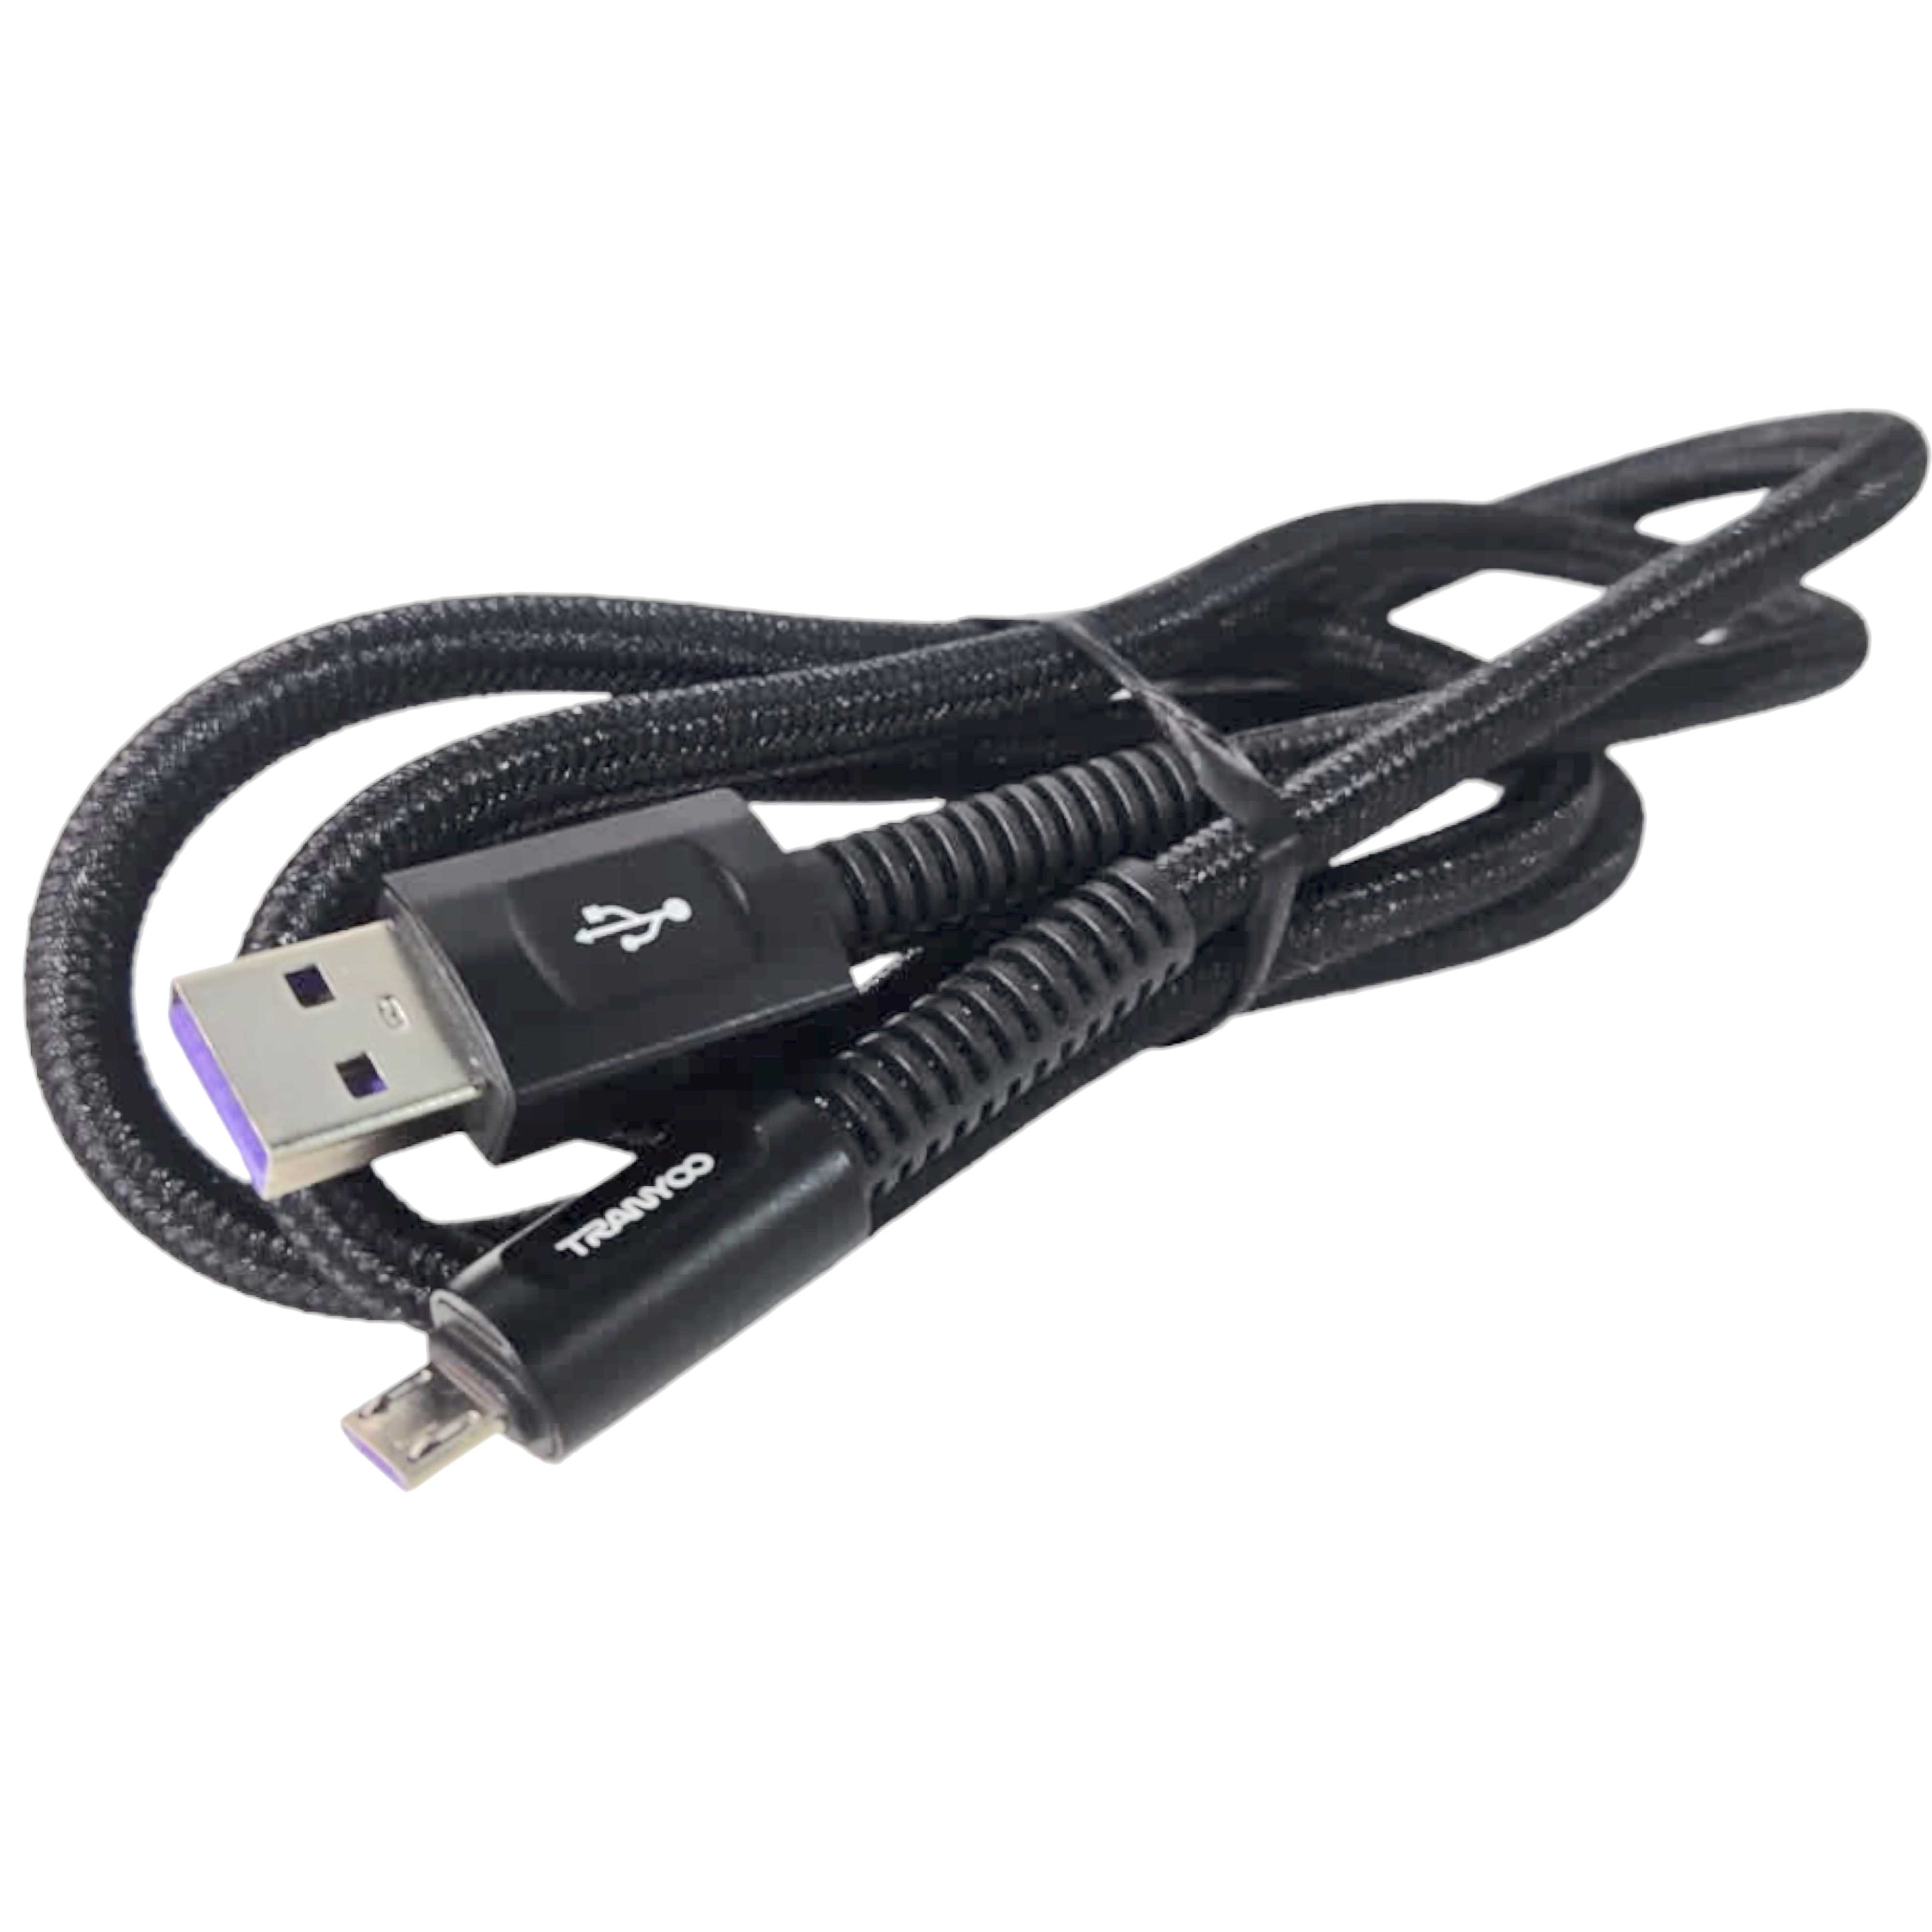 CABLE USB A MICRO USB DINAX 5.1A 2M CARGA RAPIDA LISO DX-17V82M